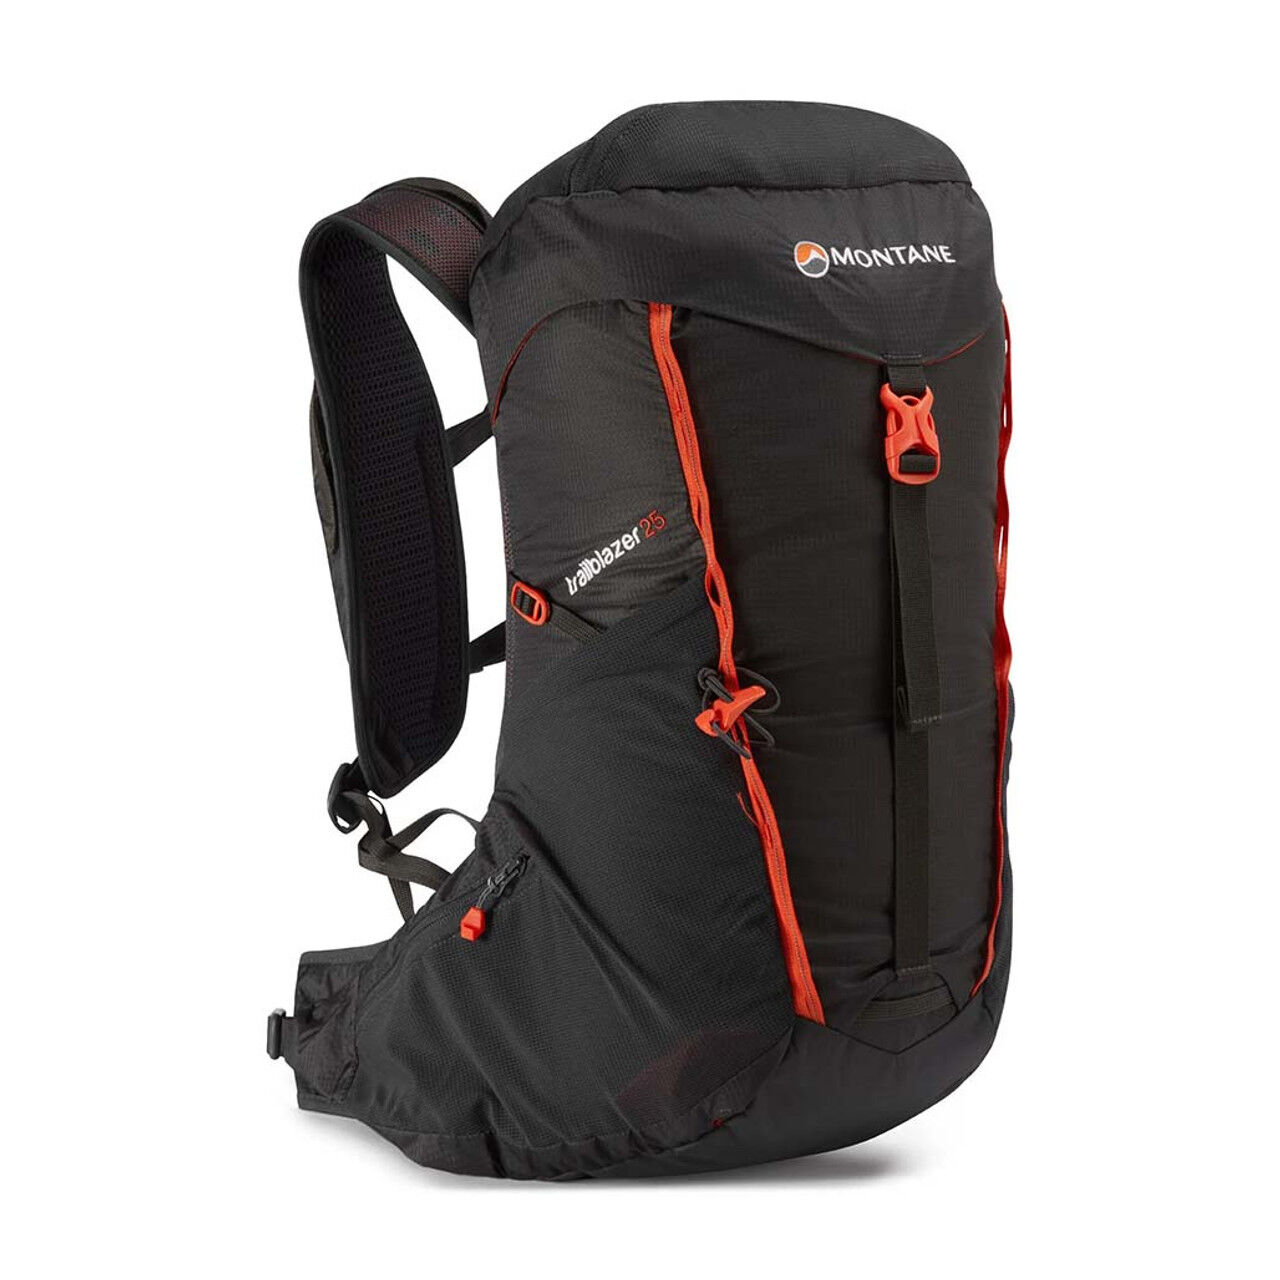 Montane 25 Backpack  - Charcoal